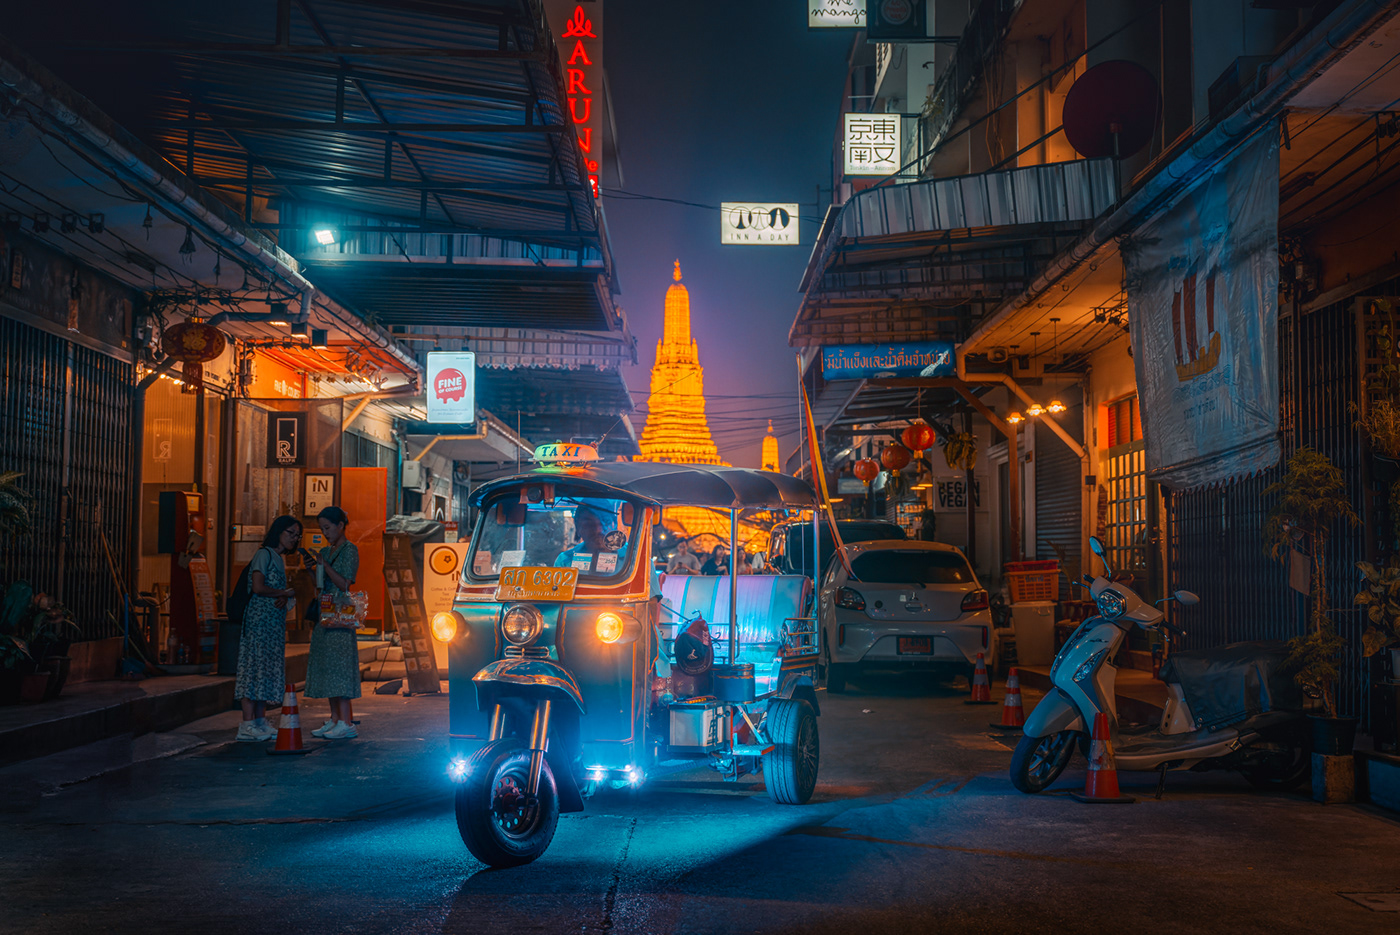 Bangkok neon neon lights night orange and teal Street